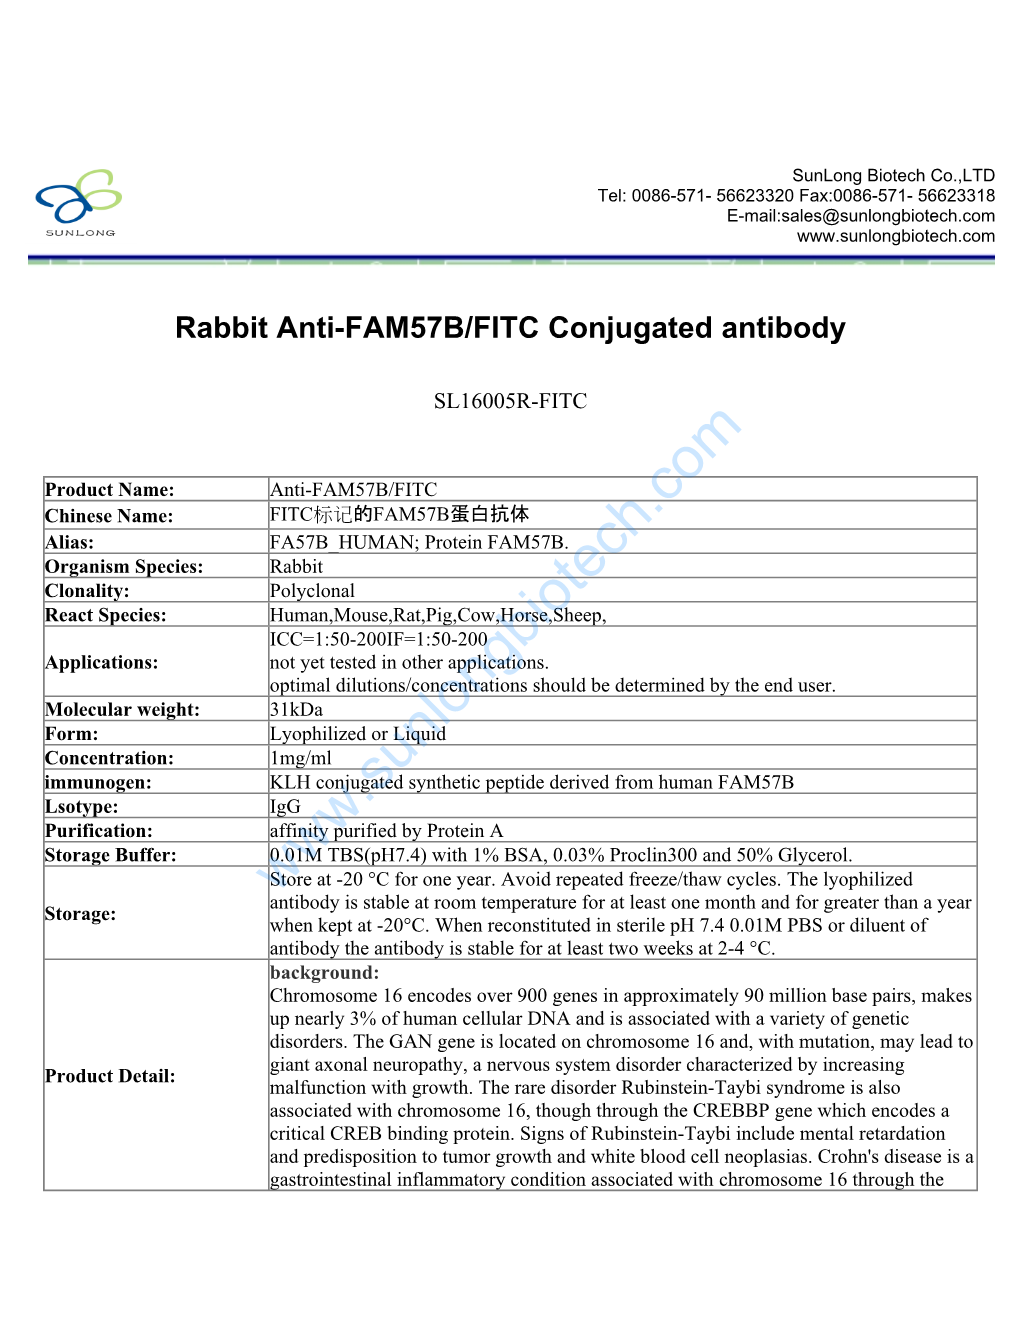 Rabbit Anti-FAM57B/FITC Conjugated Antibody-SL16005R-FITC